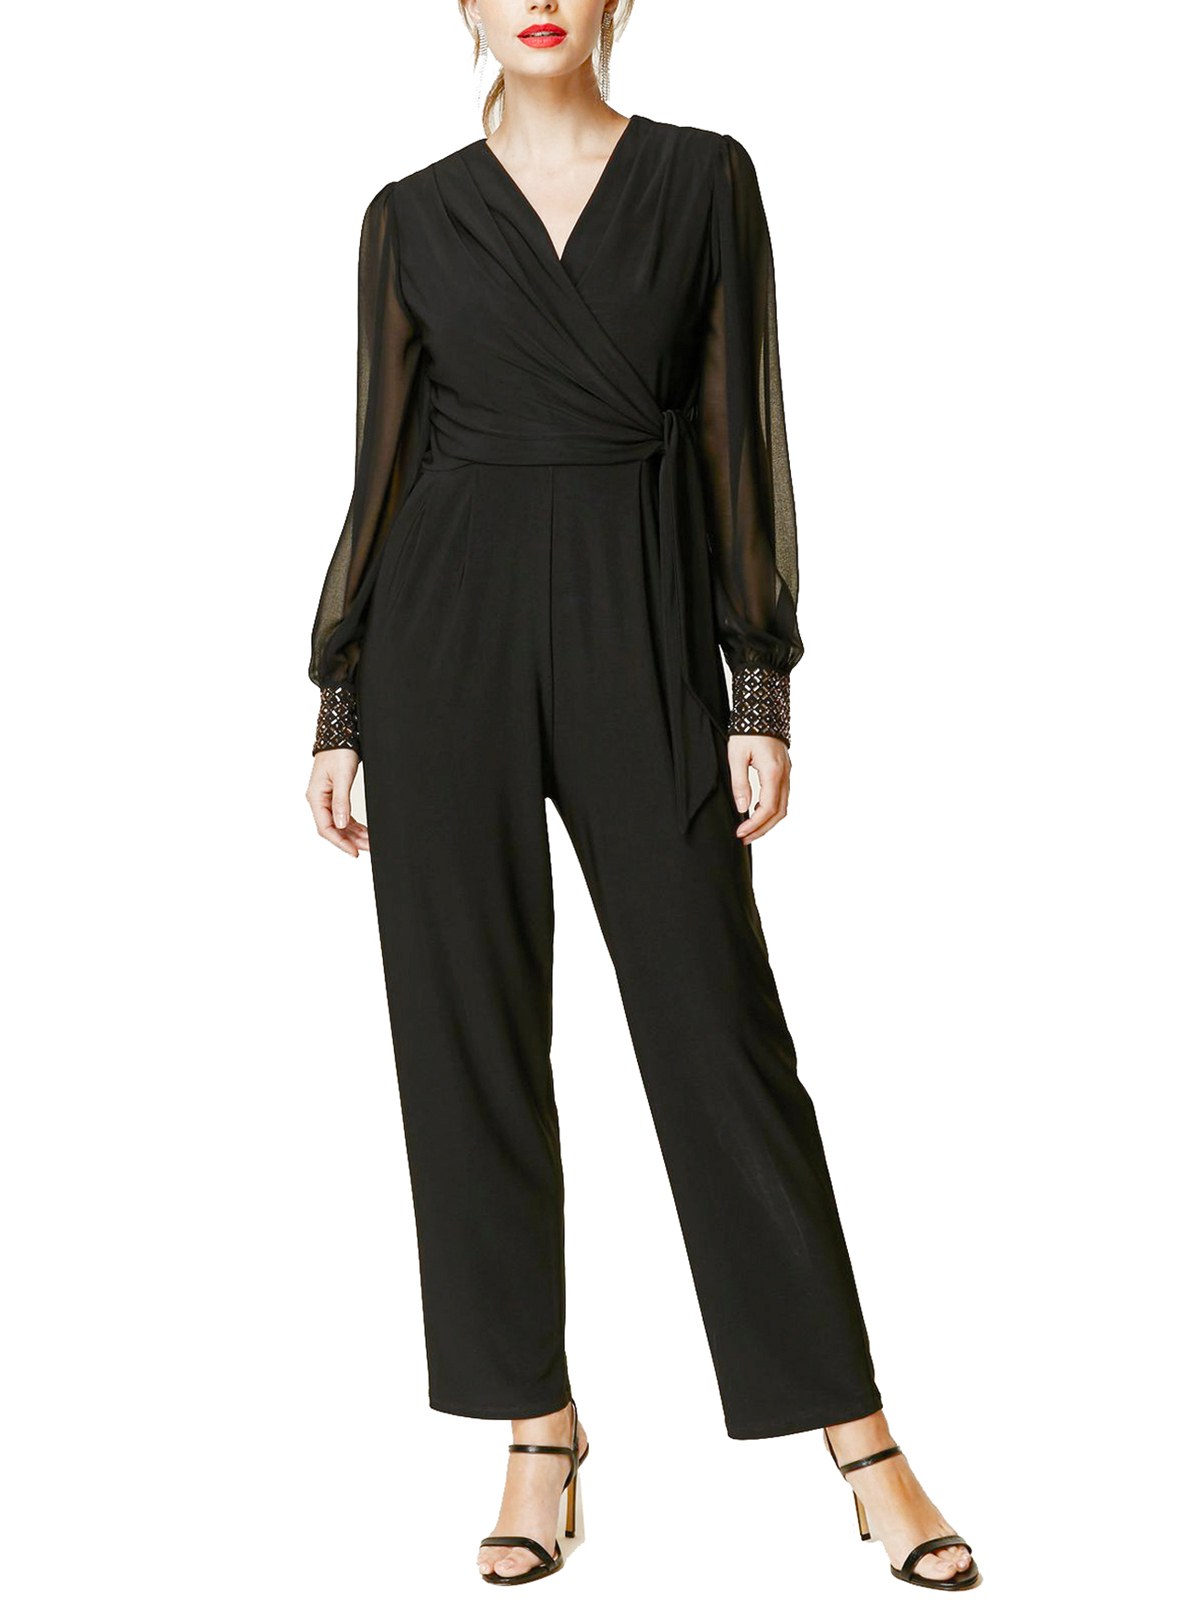 W4LLIS BLACK Petite Embellished Cuff Jumpsuit - Size 8 to 18